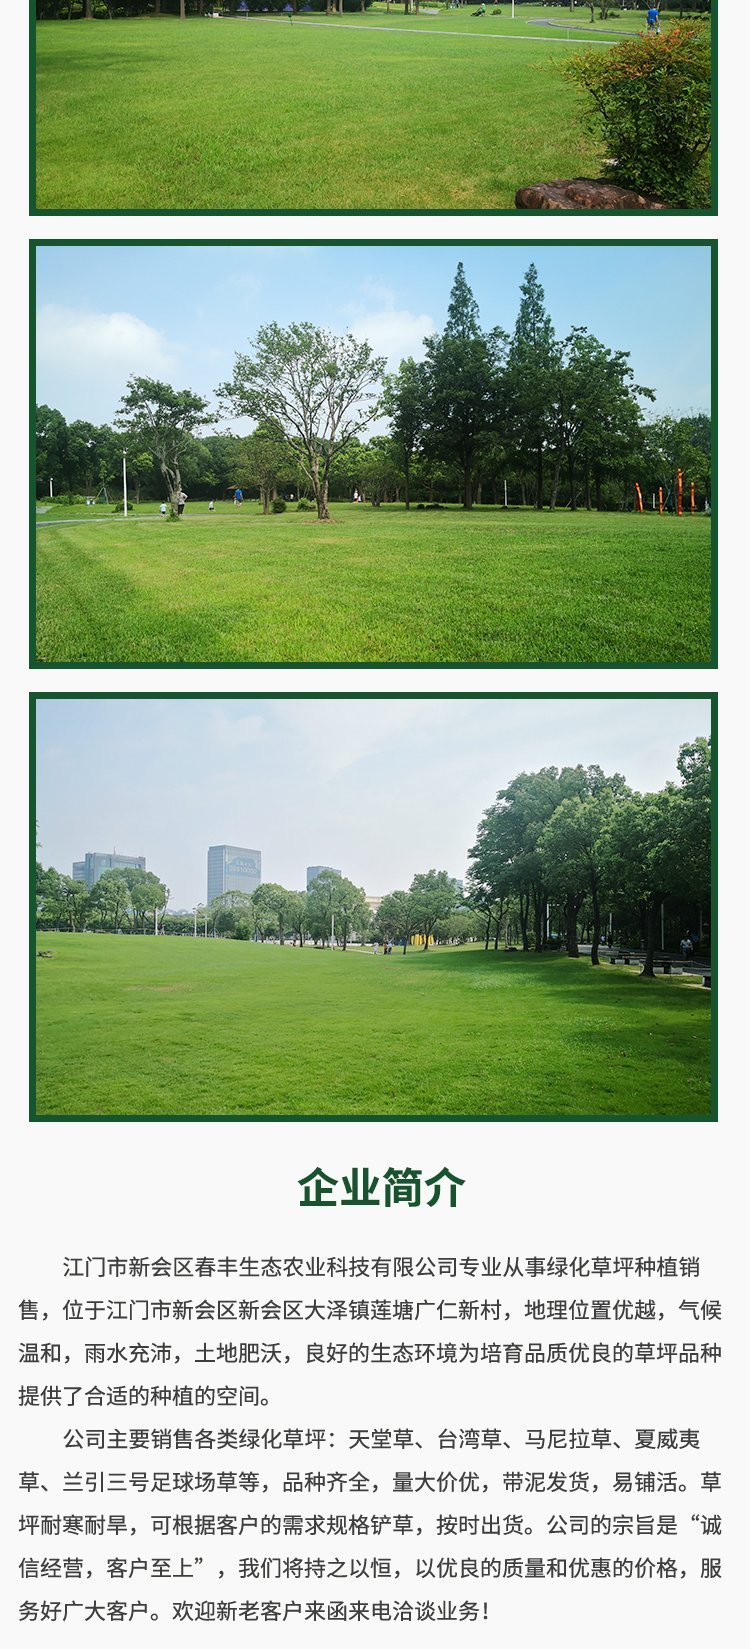 台湾青草坪